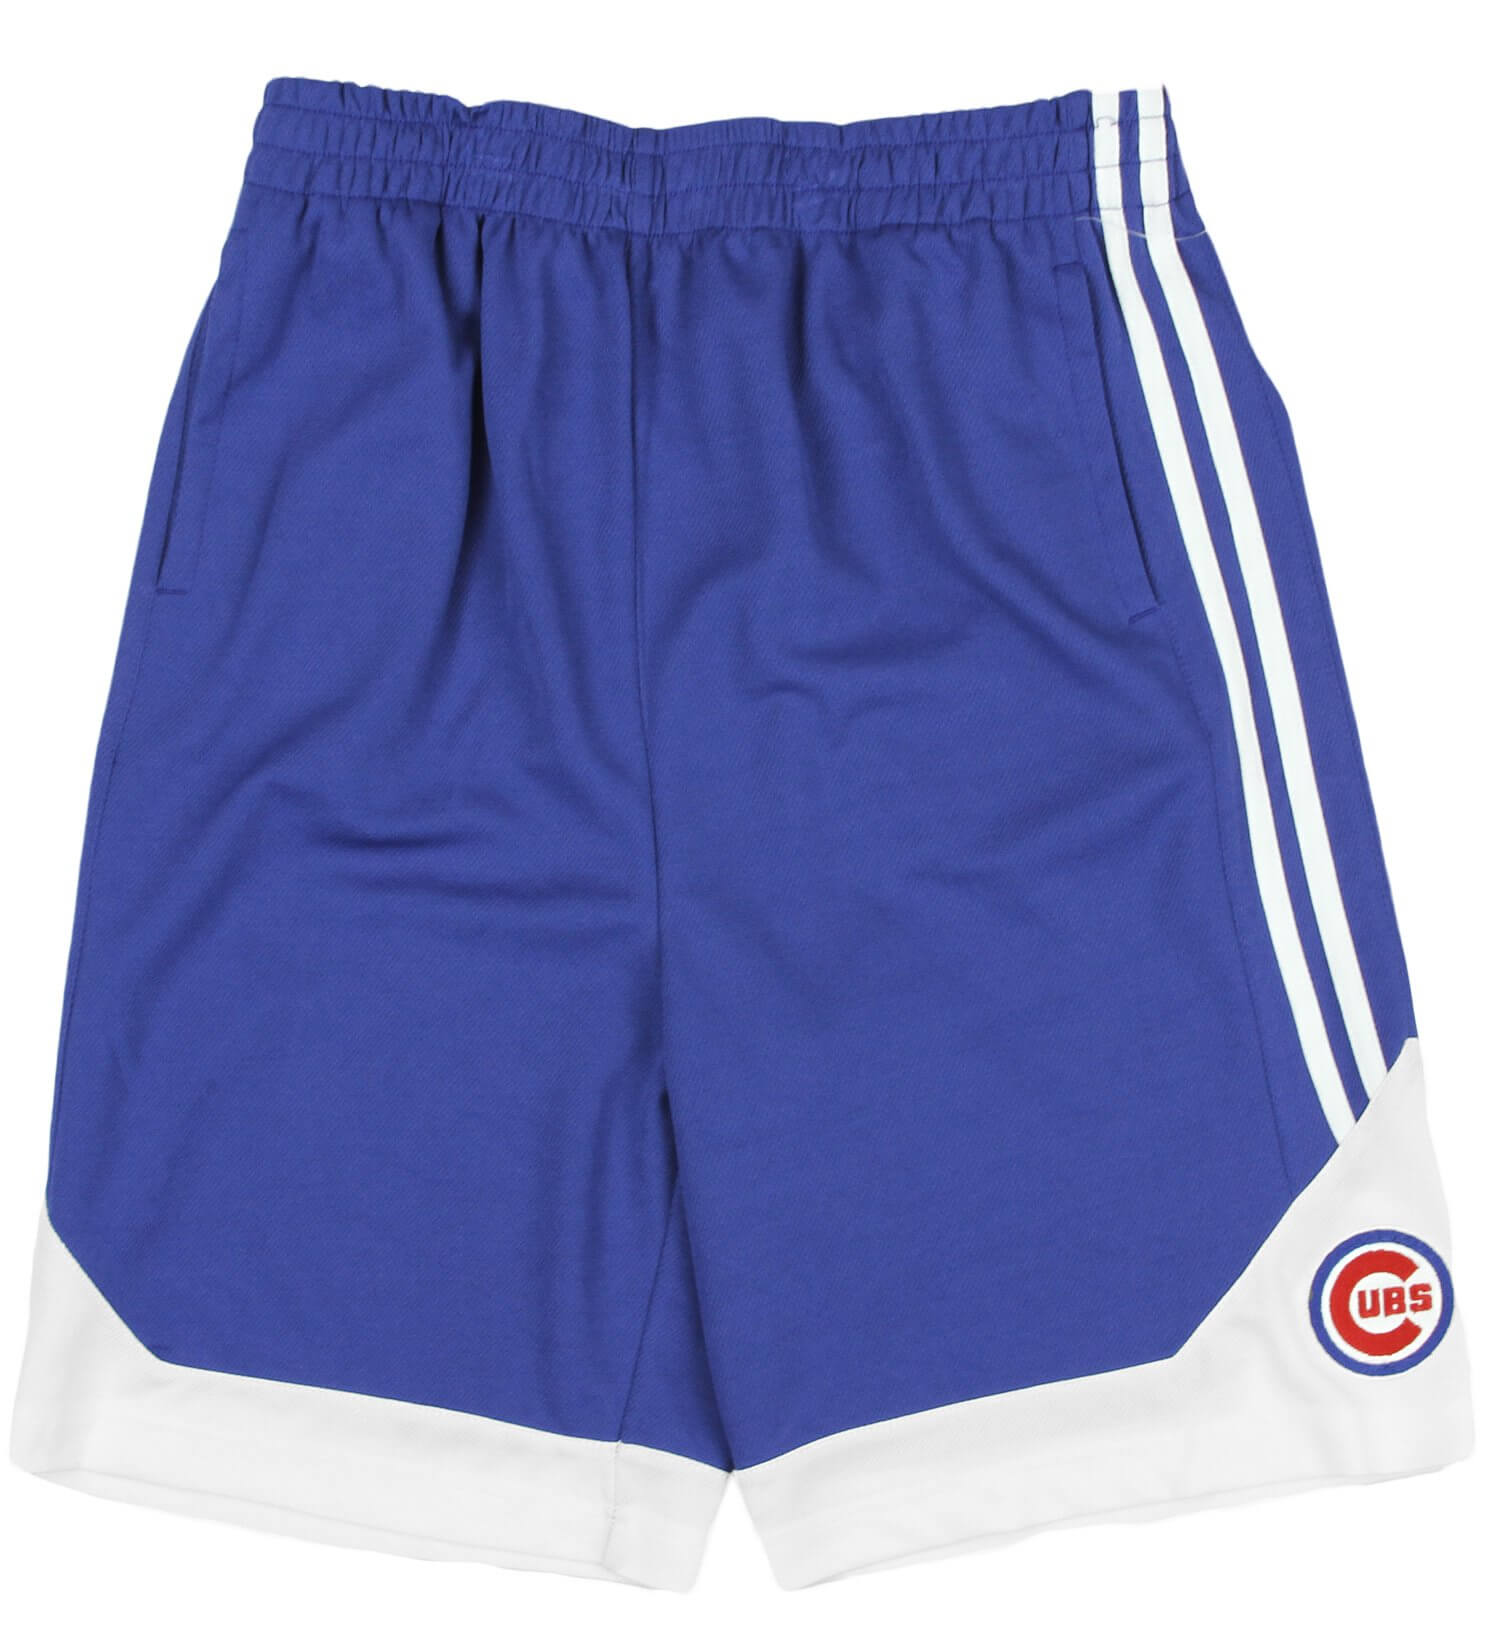 MLB Baseball Kids / Youth Chicago Cubs Striped Shorts - Royal Blue / White - 2XL (18)